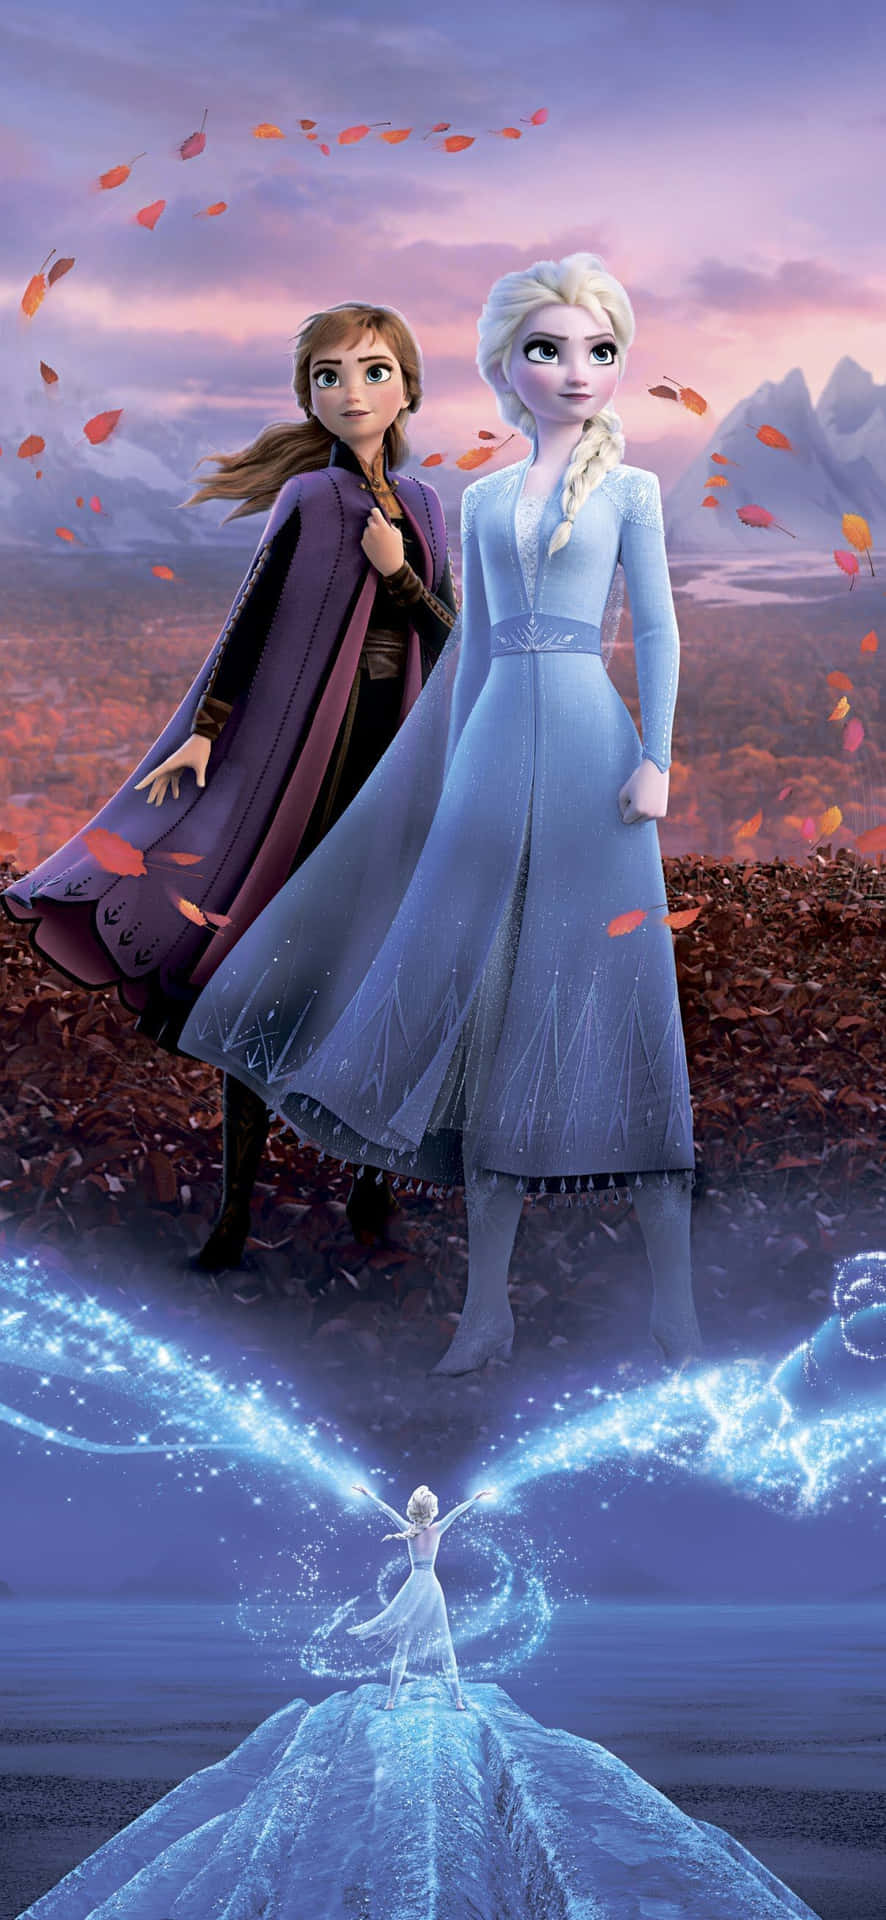 The striking beauty of Elsa's White Dress from Frozen 2 Wallpaper